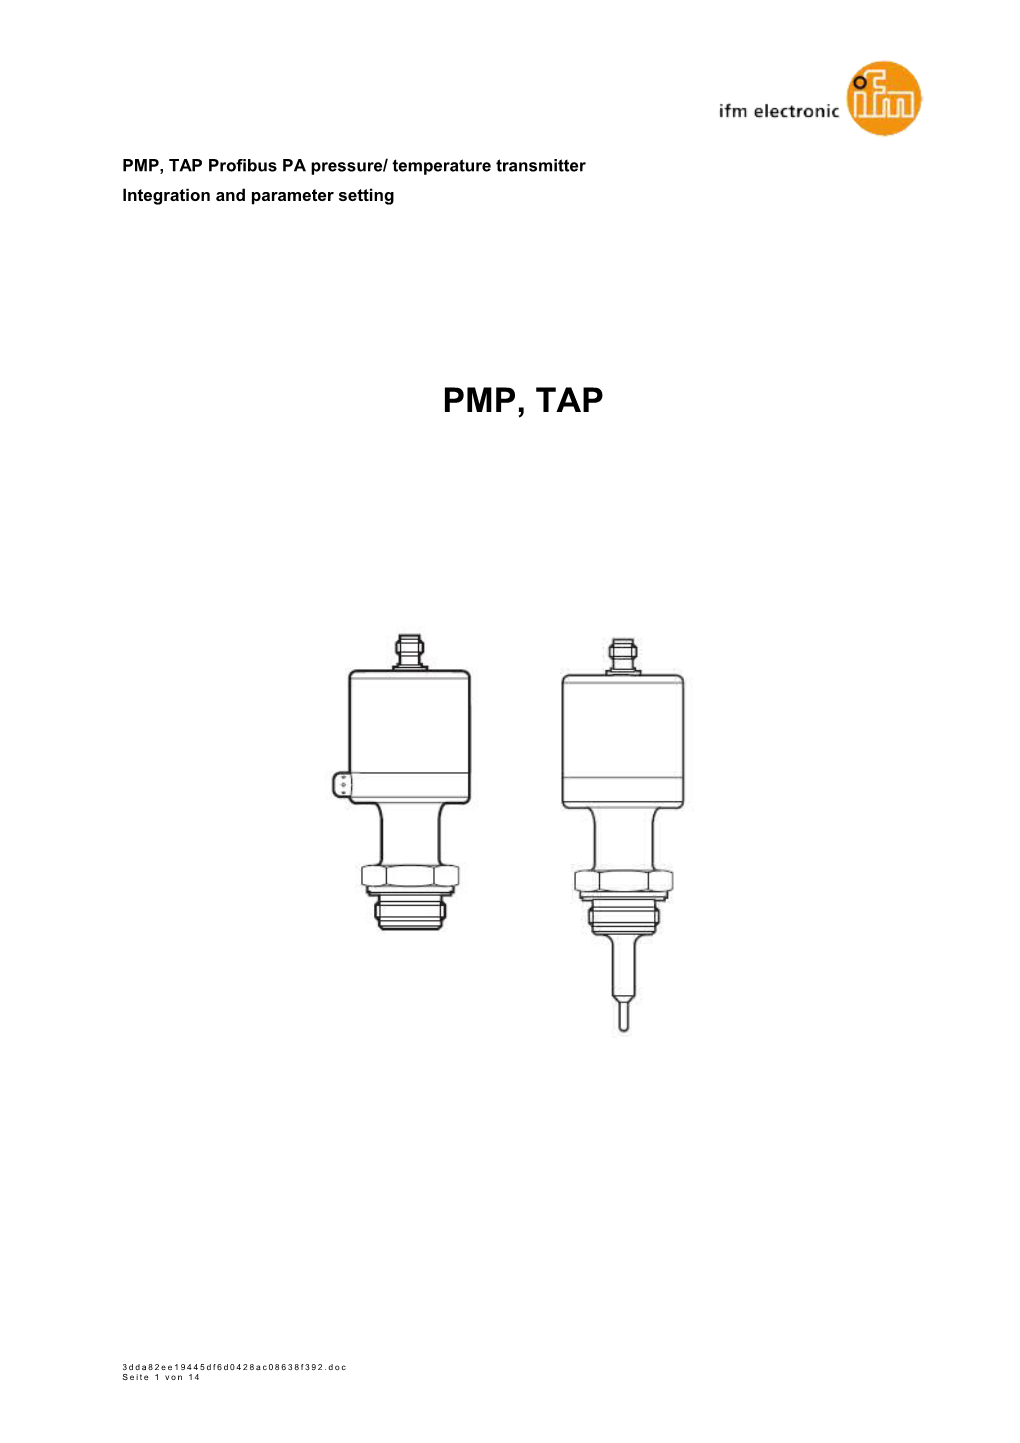 PMP, TAP Profibus PA Pressure/ Temperature Transmitter